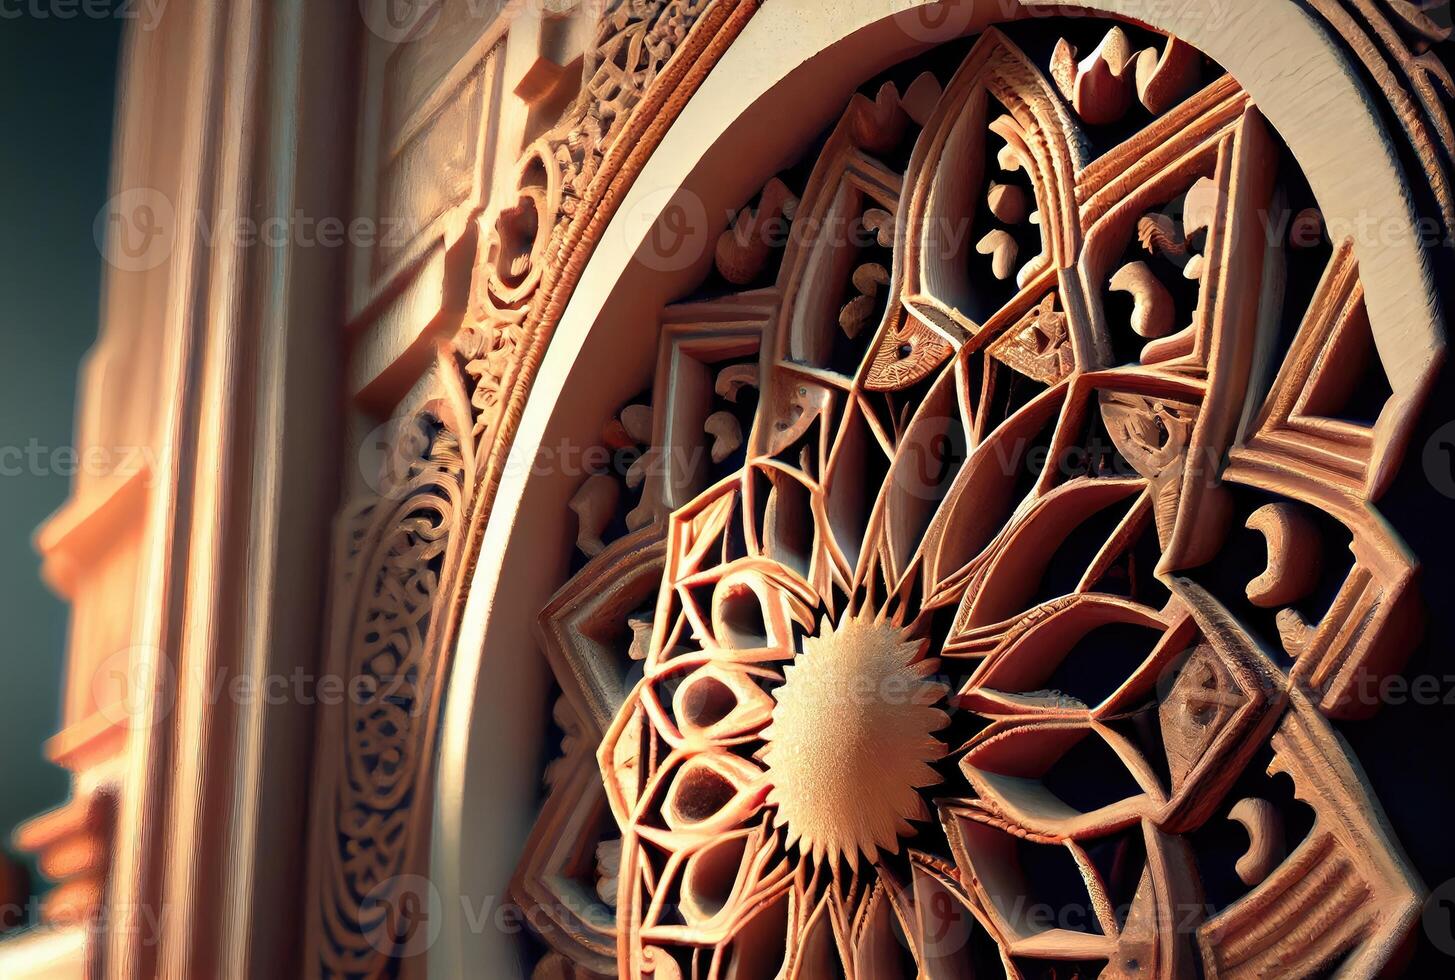 Islamic decoration pattern interior background. Art and decorative concept. Digital art fantasy illustration. photo